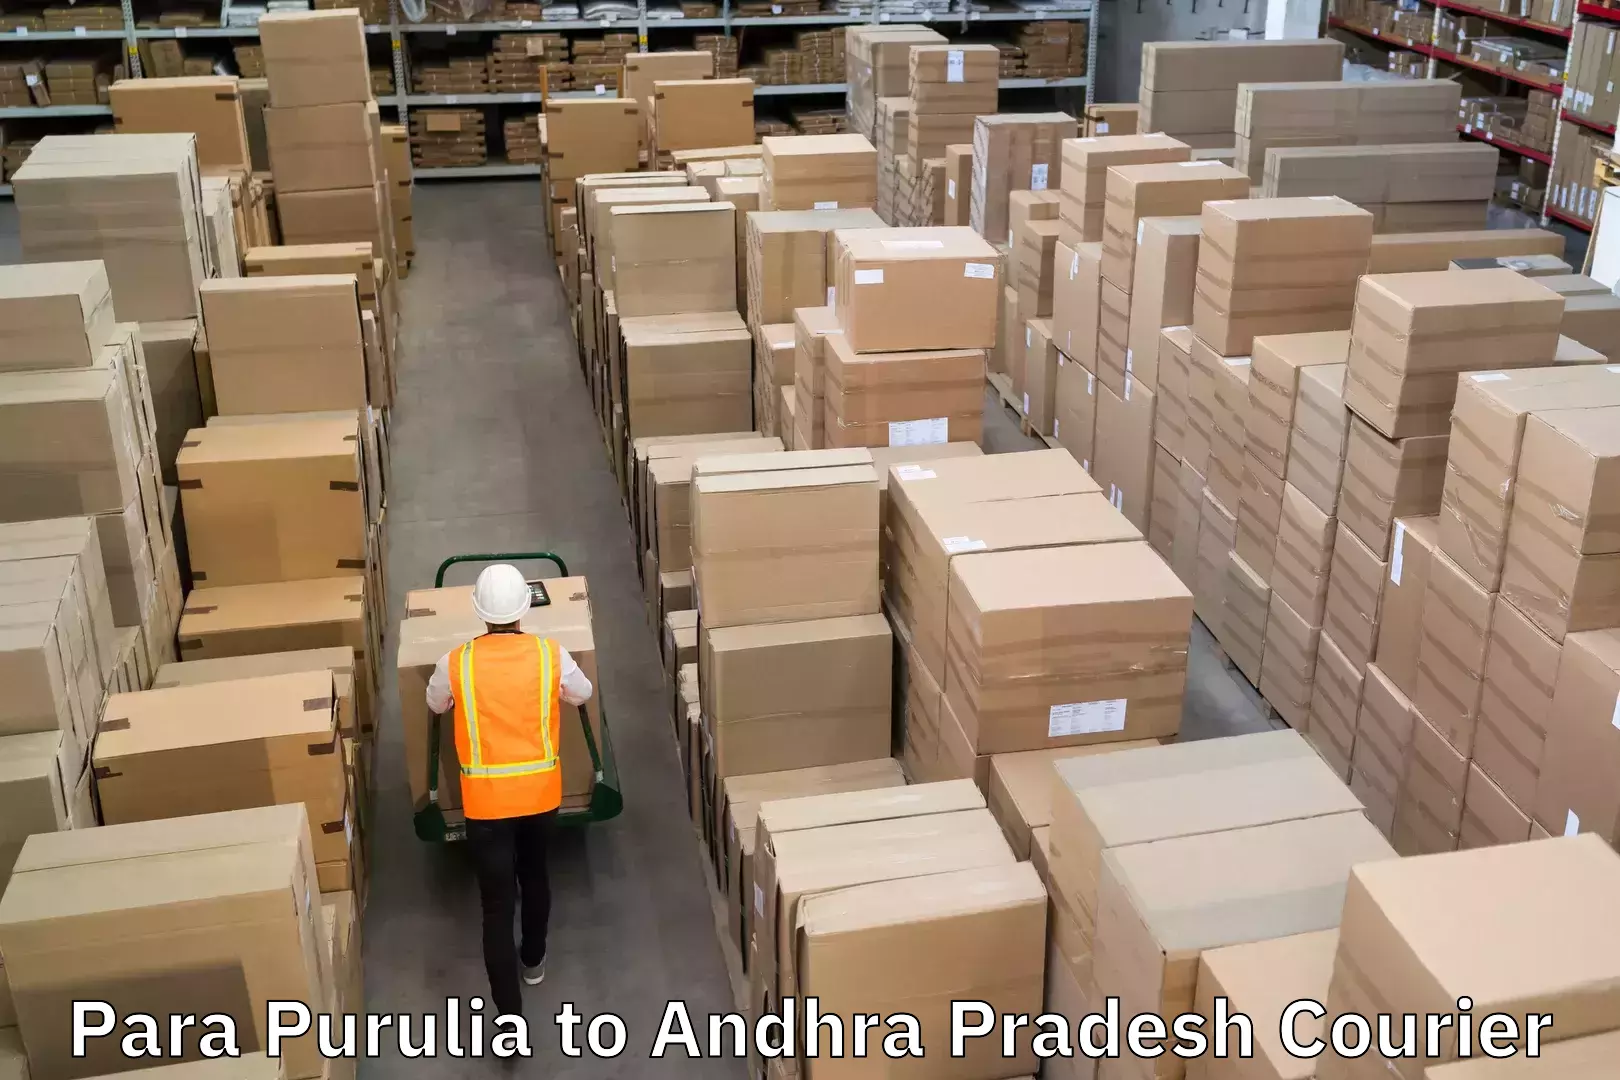 Multi-national courier services Para Purulia to Andhra Pradesh